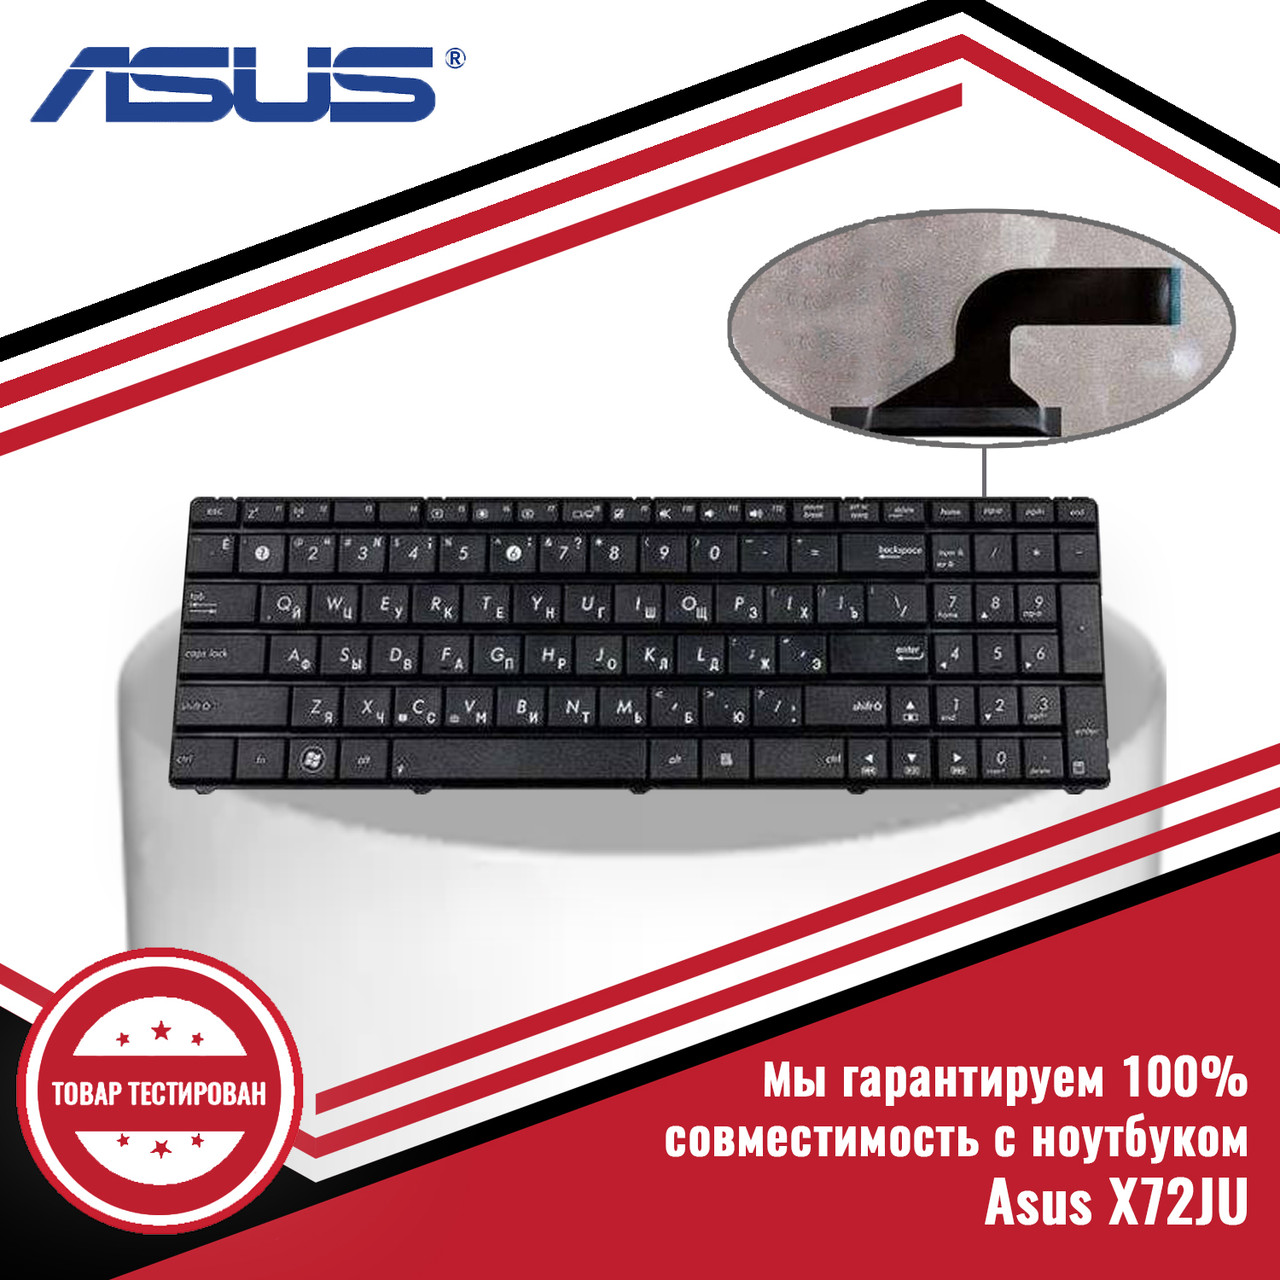 Клавиатура для ноутбука Asus X72Ju